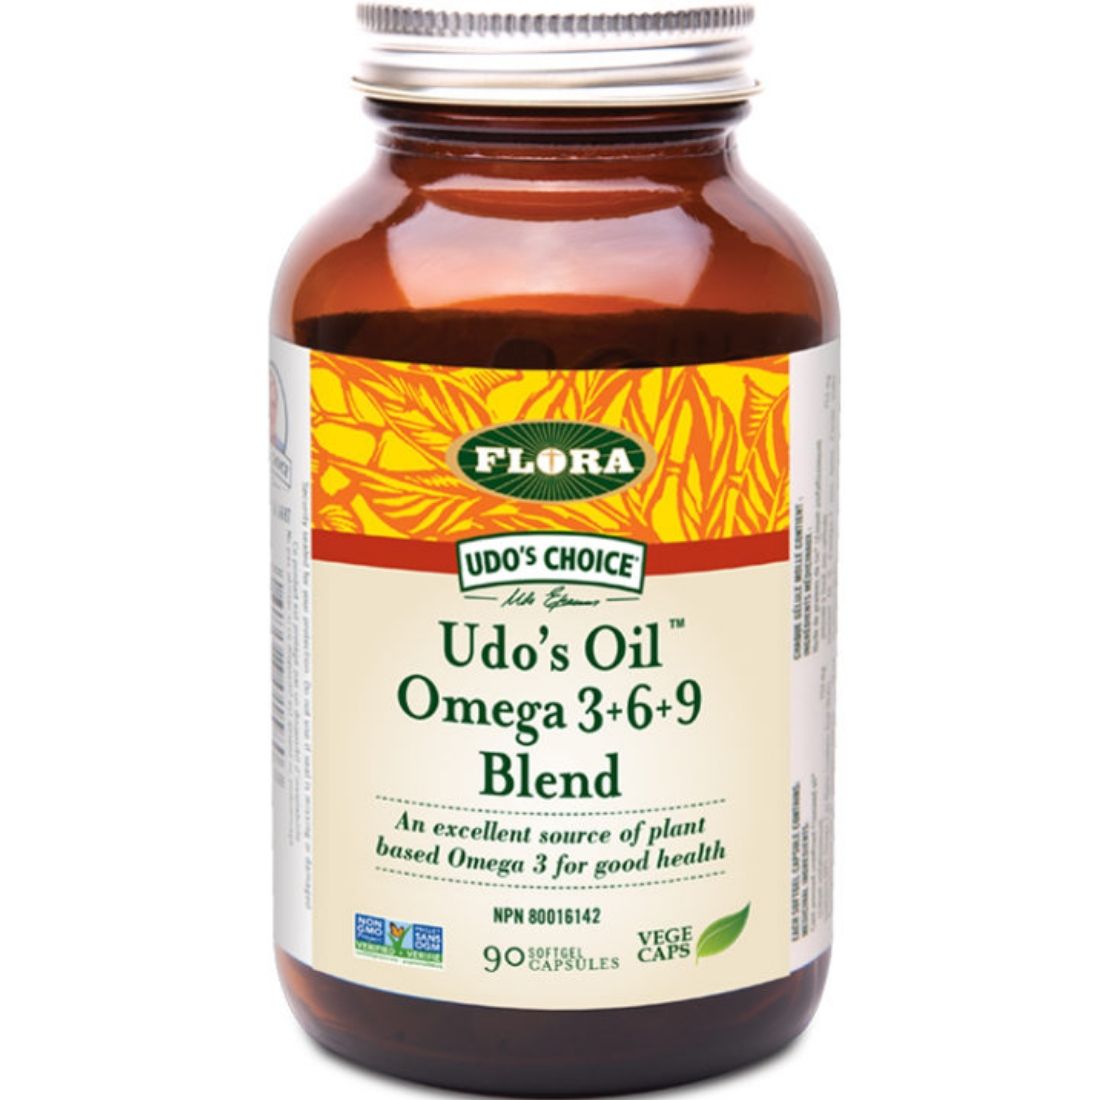 Flora Udos Choice Udo’s Oil 3-6-9 Blend